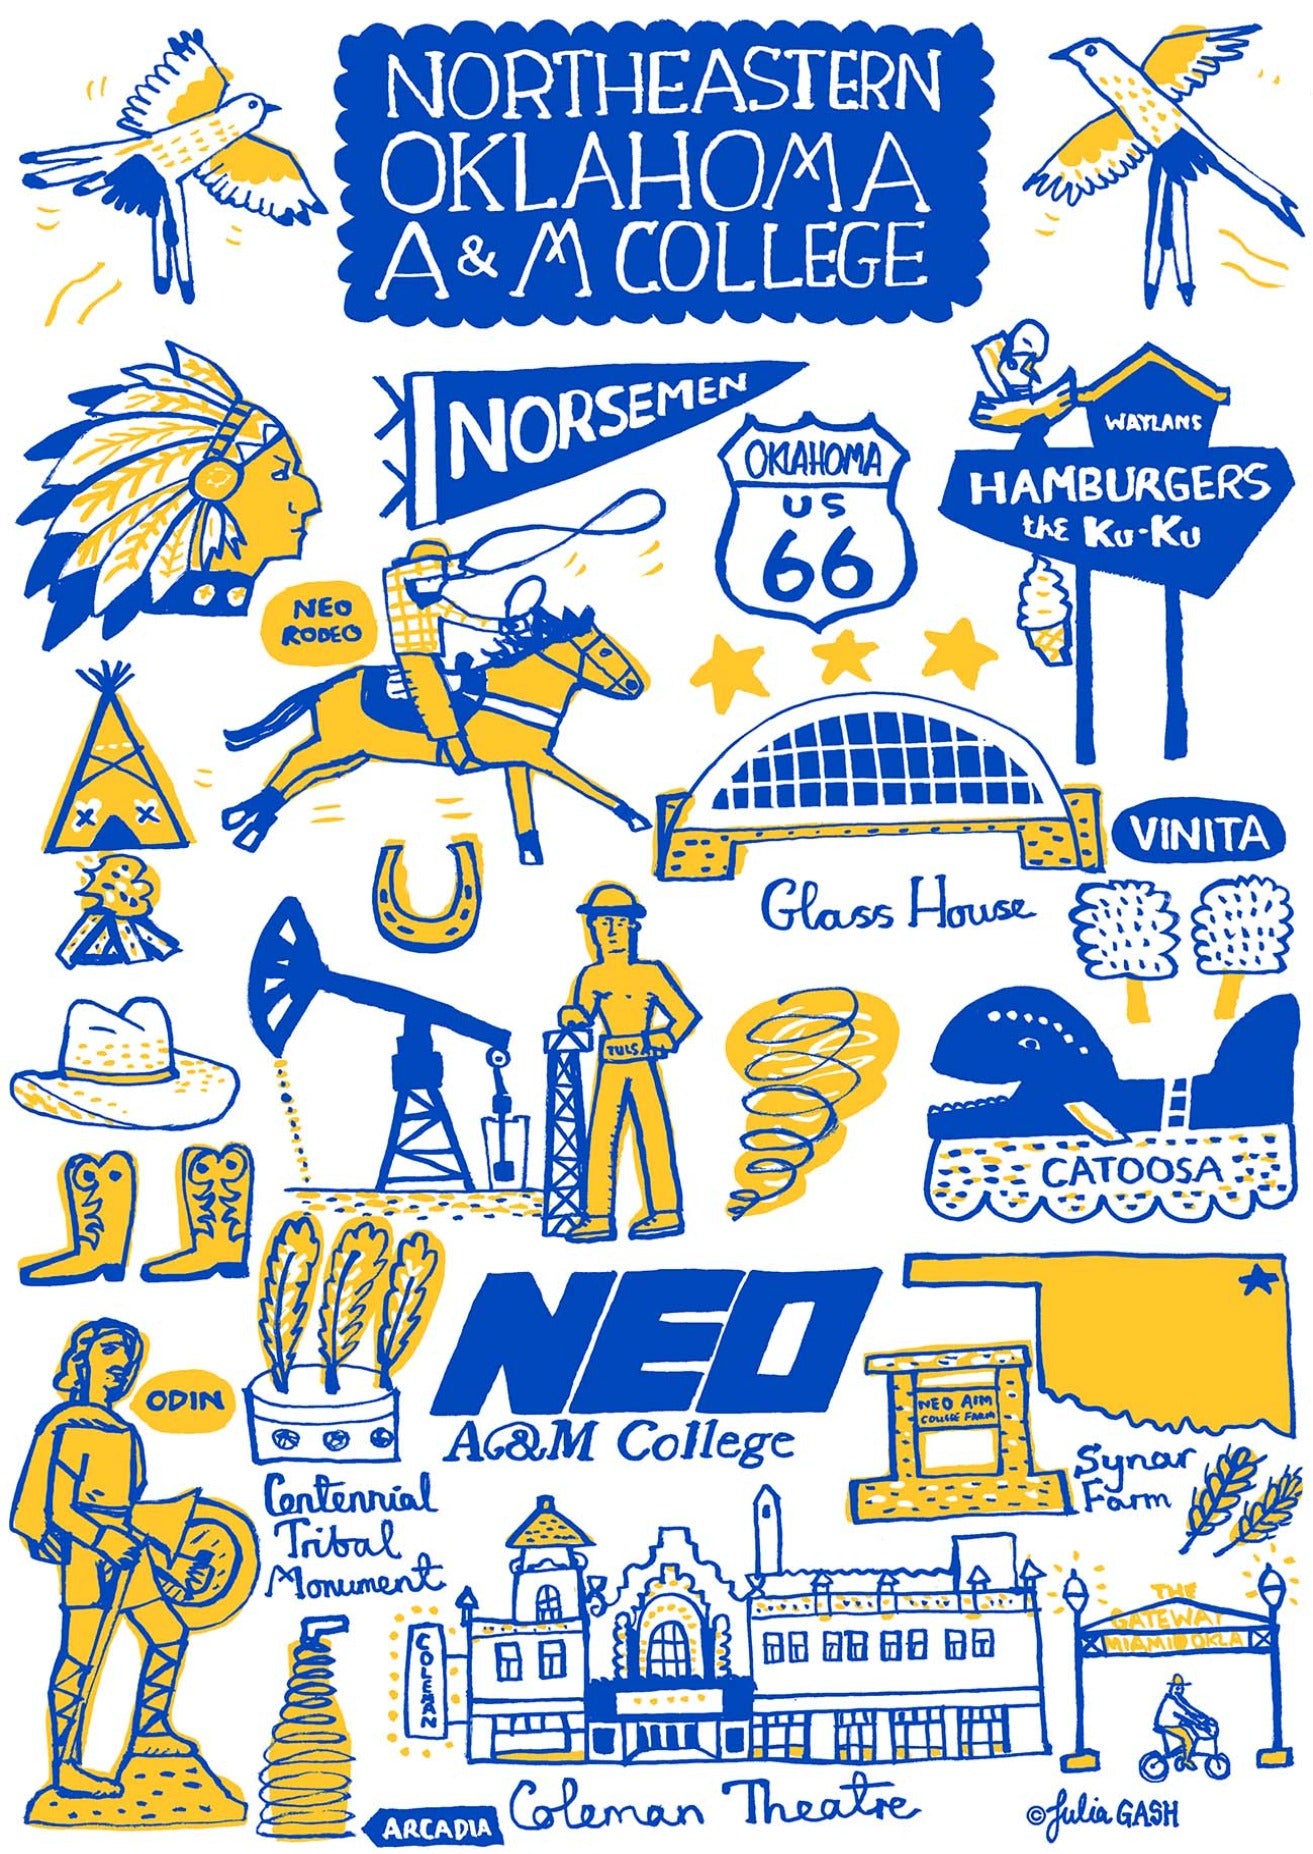 NEO A&M College by Julia Gash